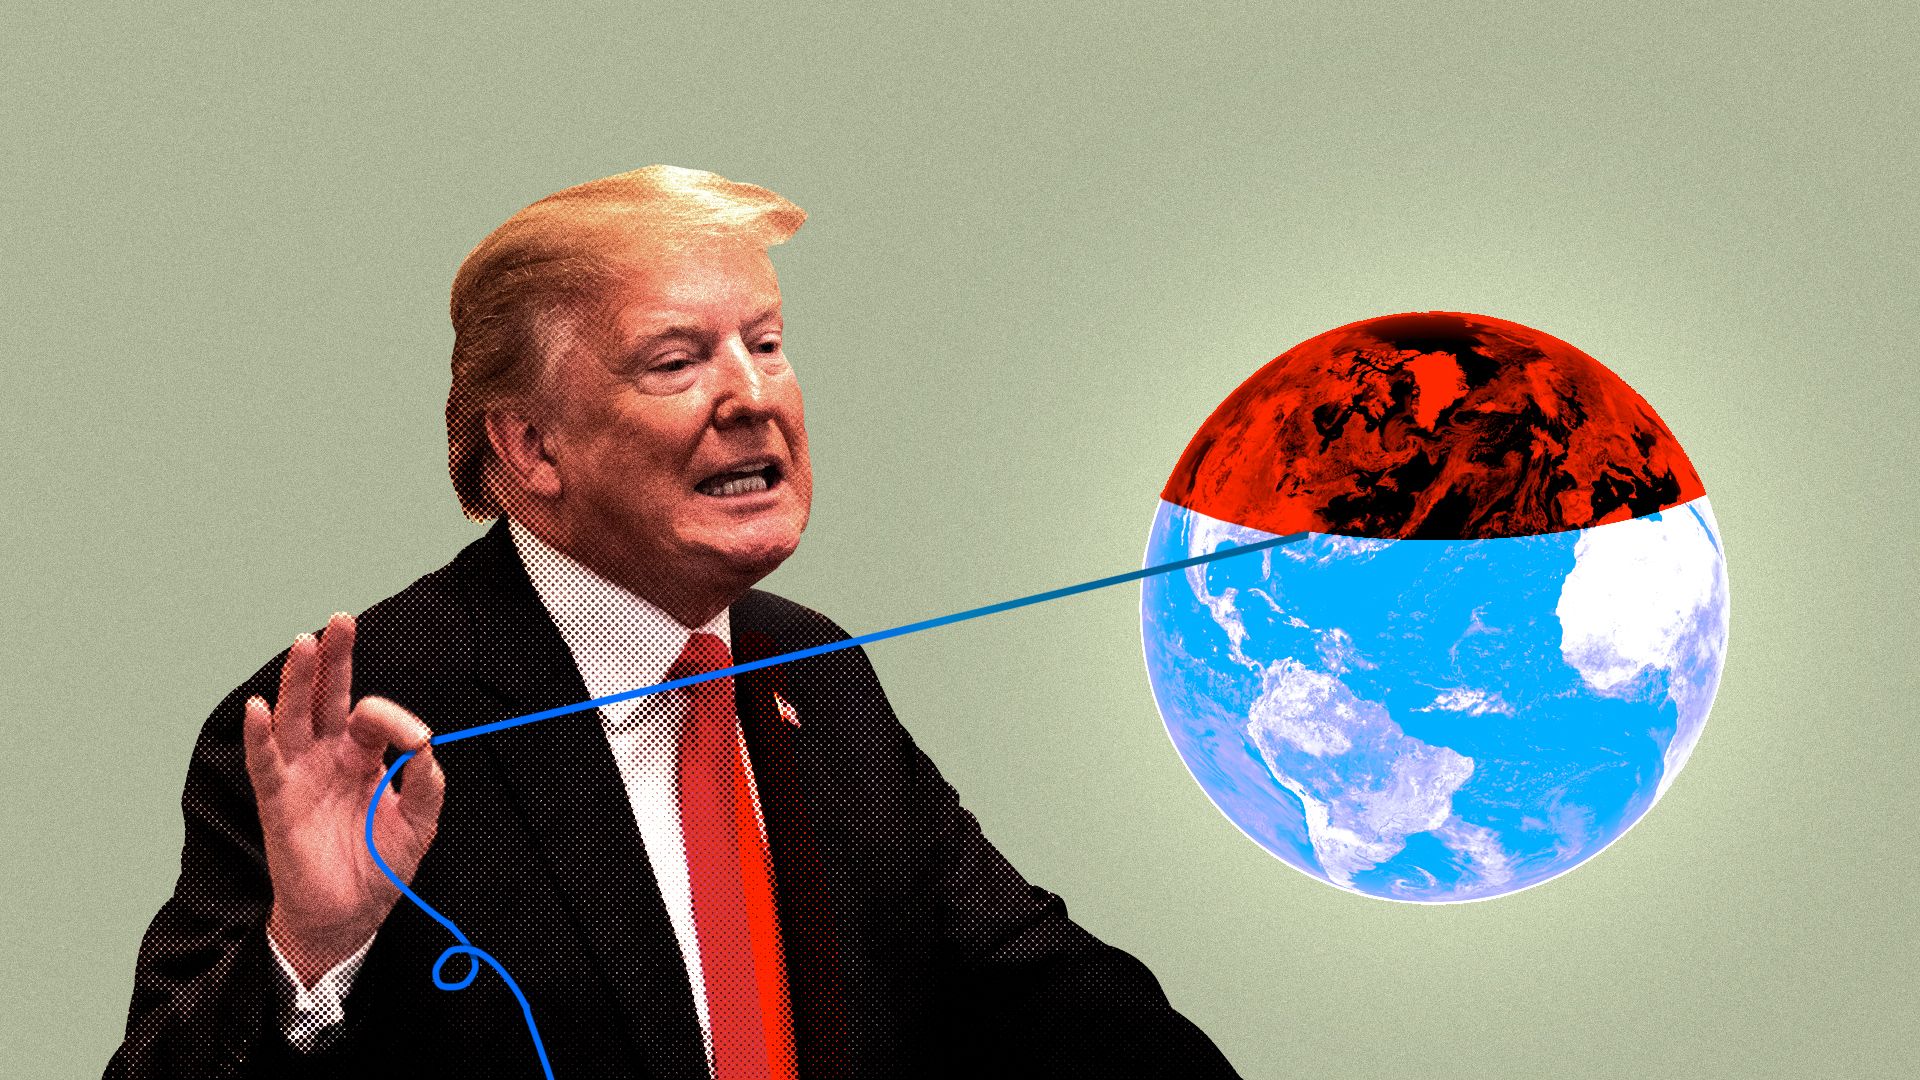 Trump unravels a world globe representing the 20th Century